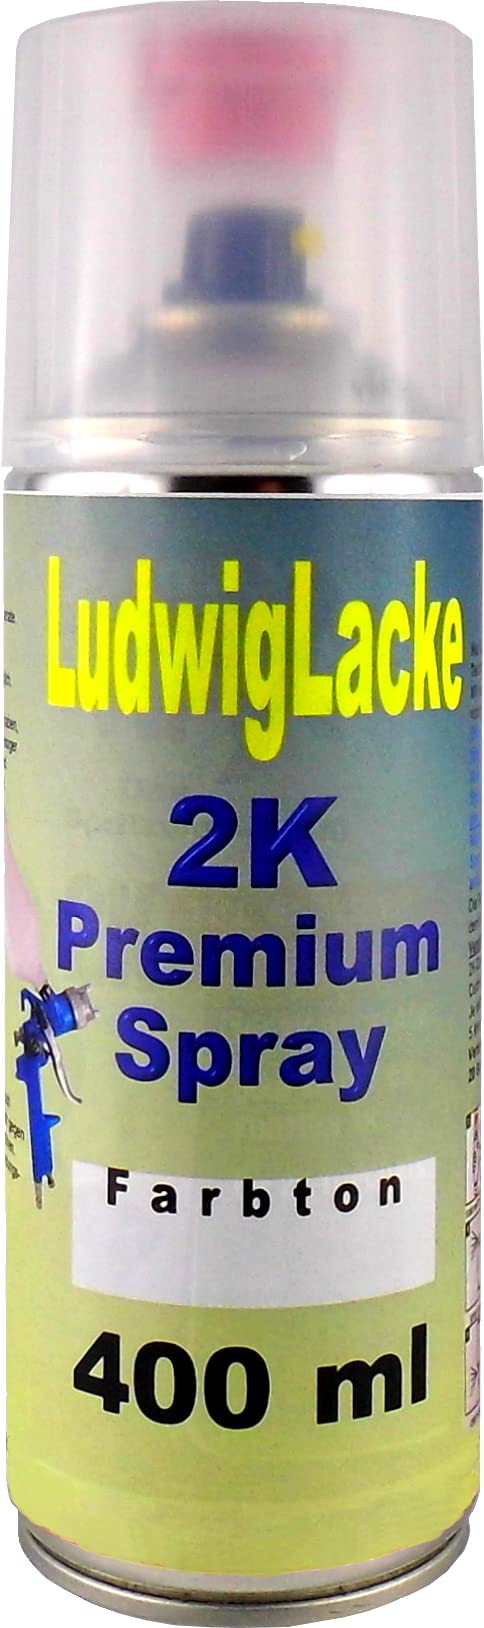 RAL 7024 Graphitgrau 2K Premium Spray MATT 400ml von Ludwiglacke